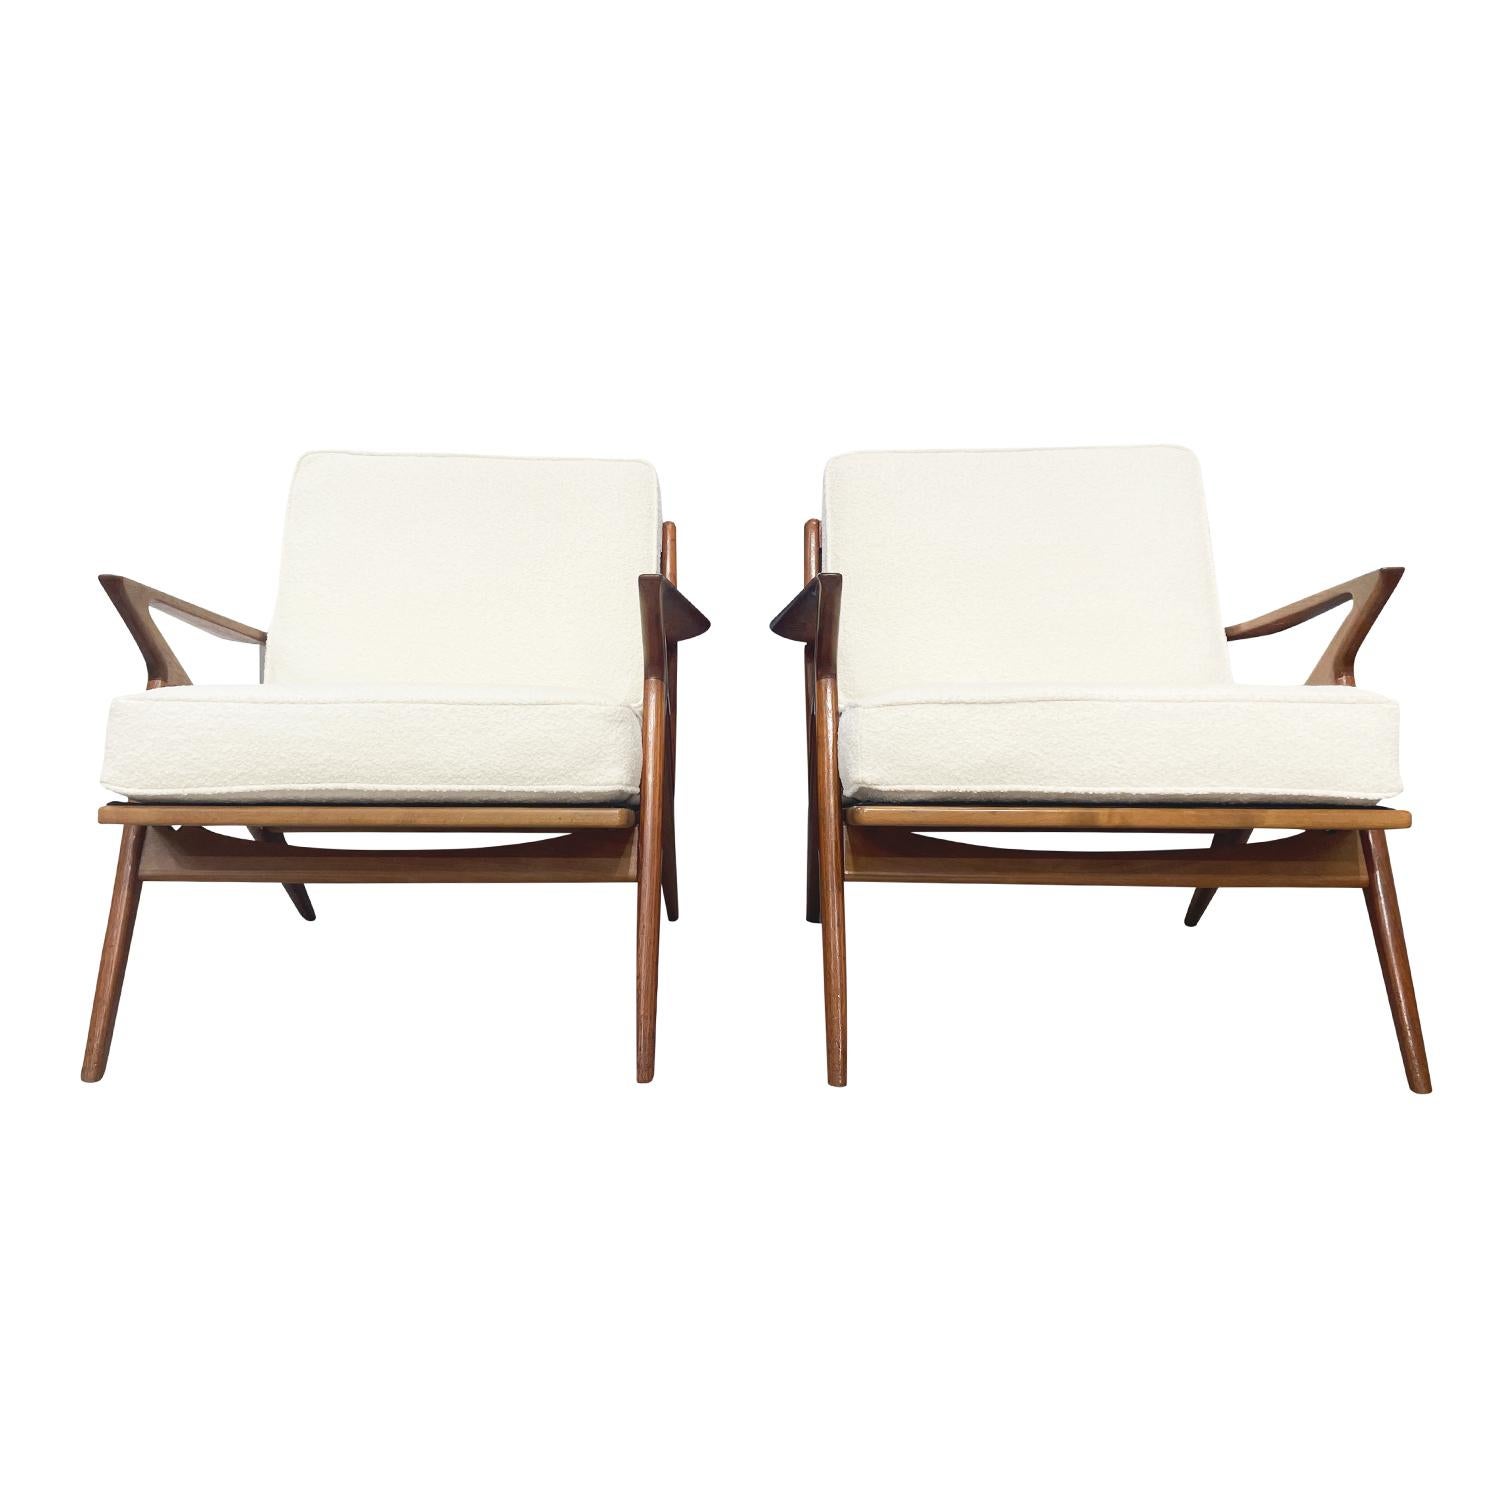 A light-brown, vintage Mid-Century modern Danish pair of 